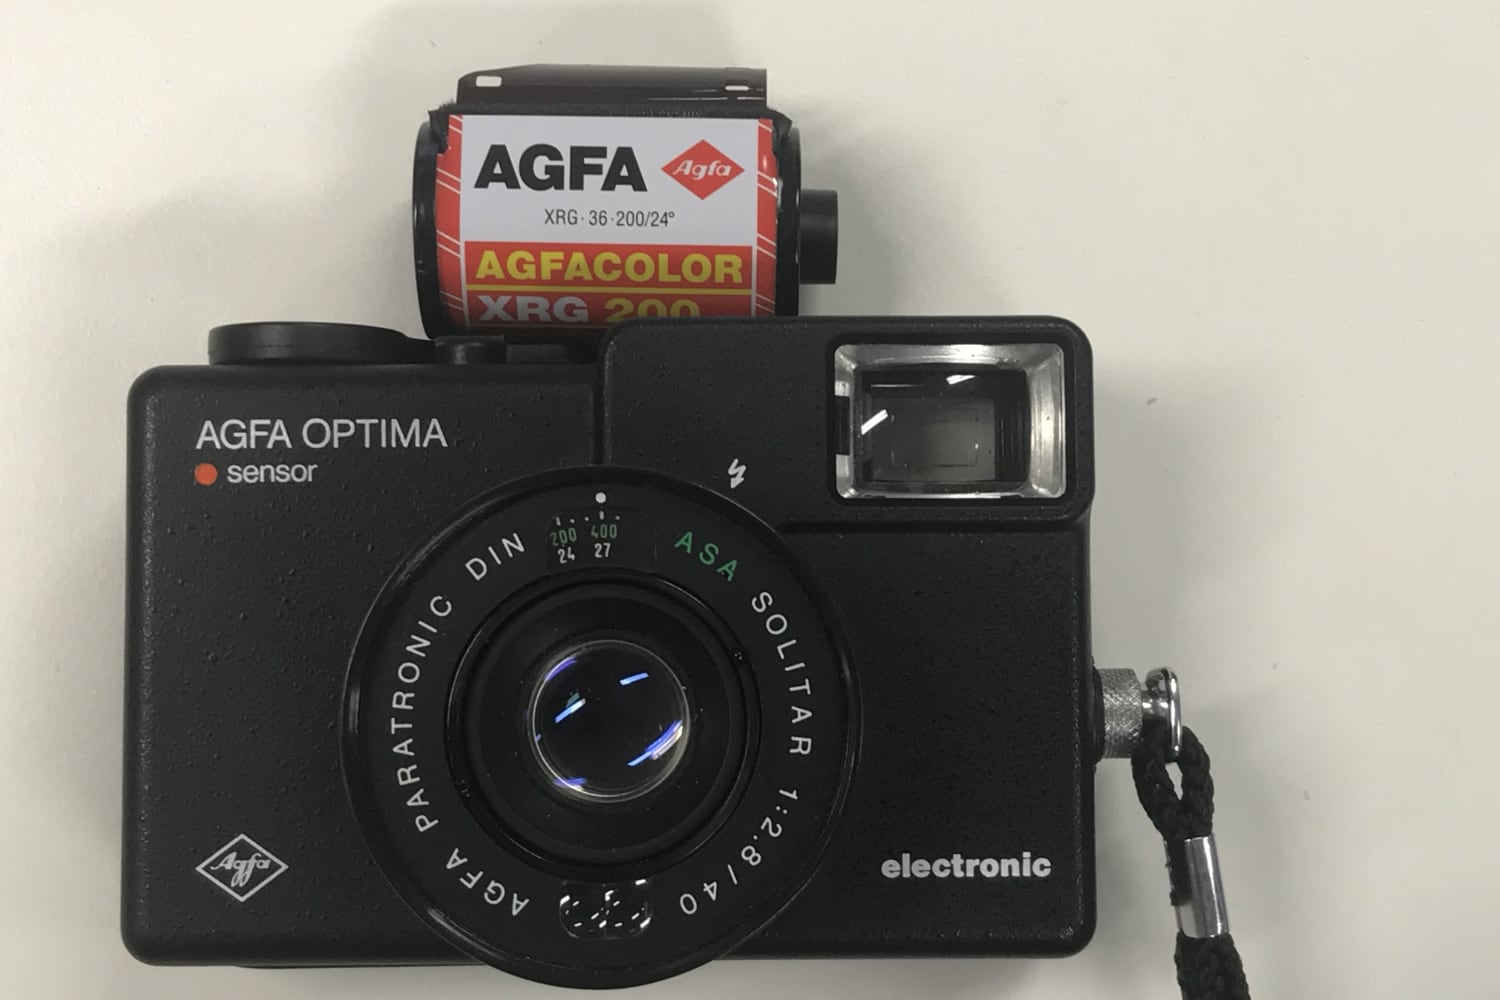 Camera compared to 35mm film